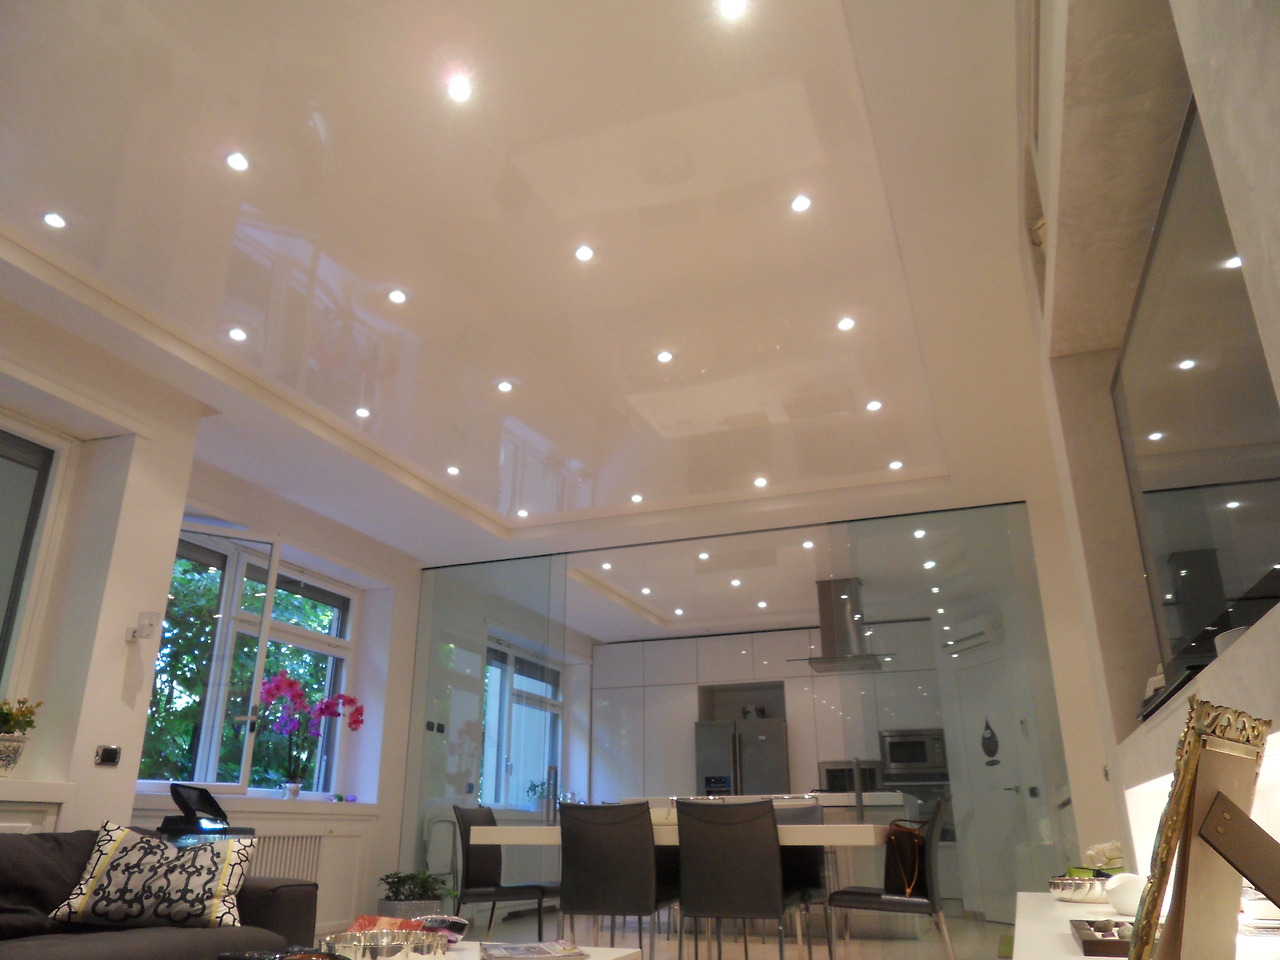 Výhody a nevýhody víceúrovňového strečového stropu v obývacím pokoji